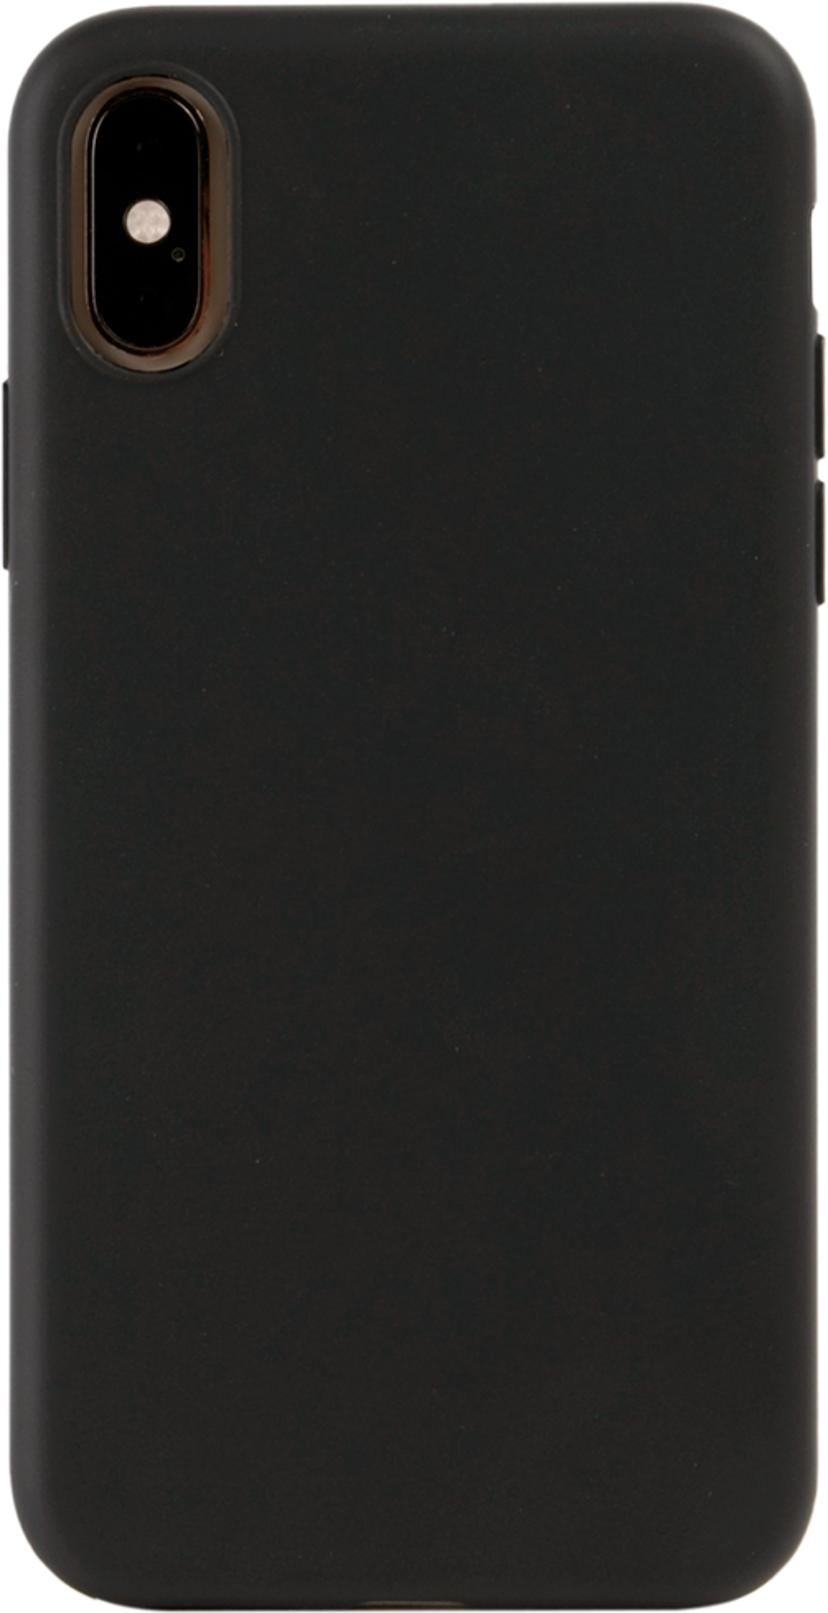 Cirafon Silicone Case for Iphone X/XS Black  Zwart